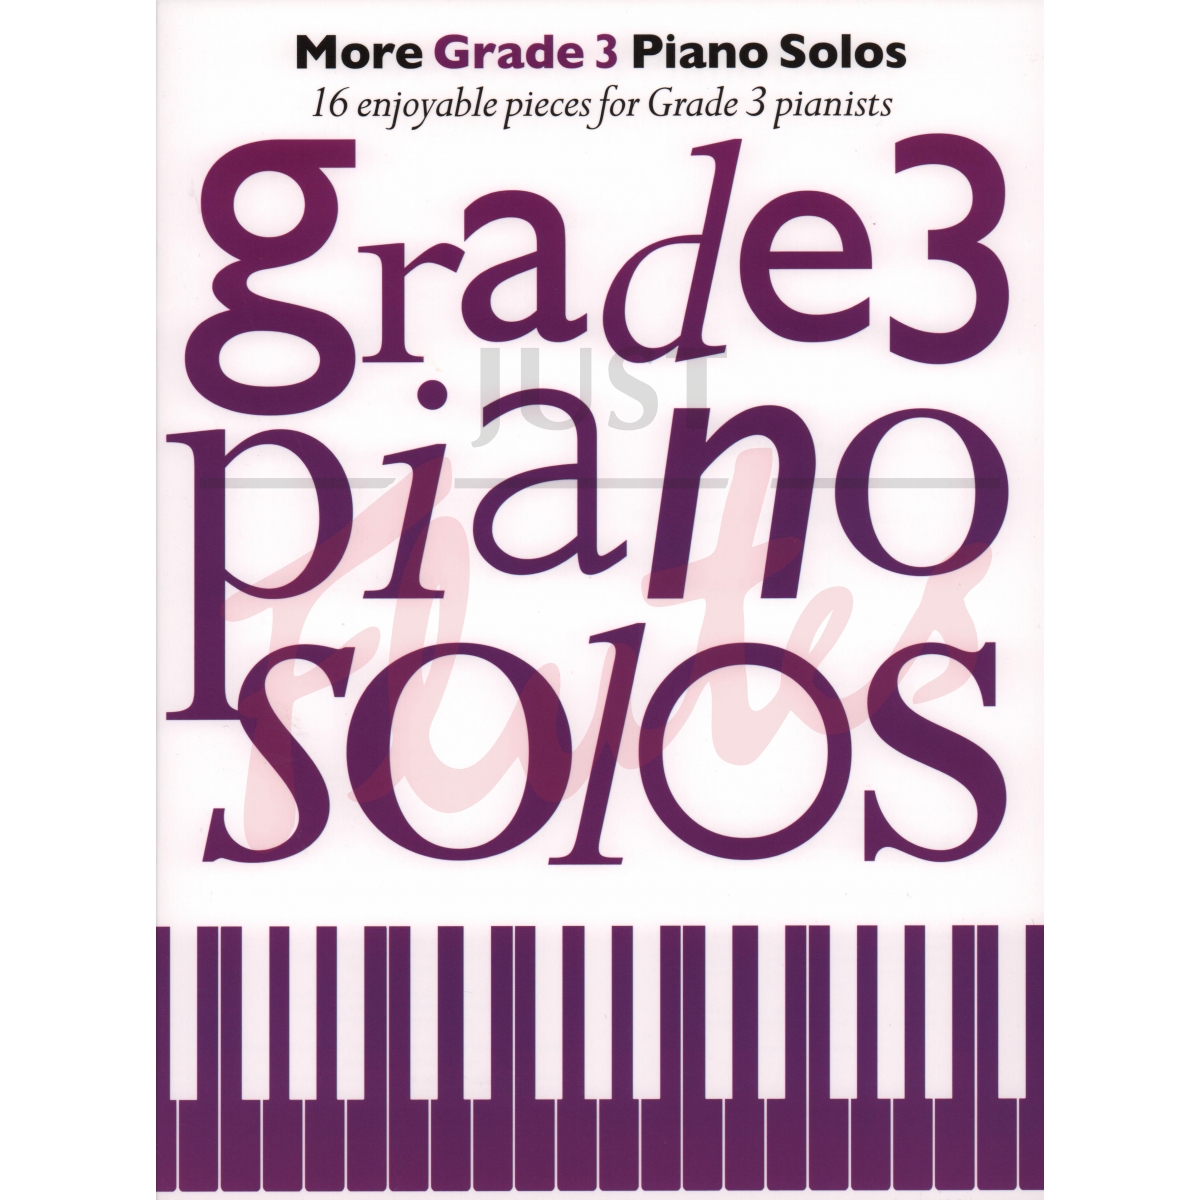 More Grade 3 Piano Solos